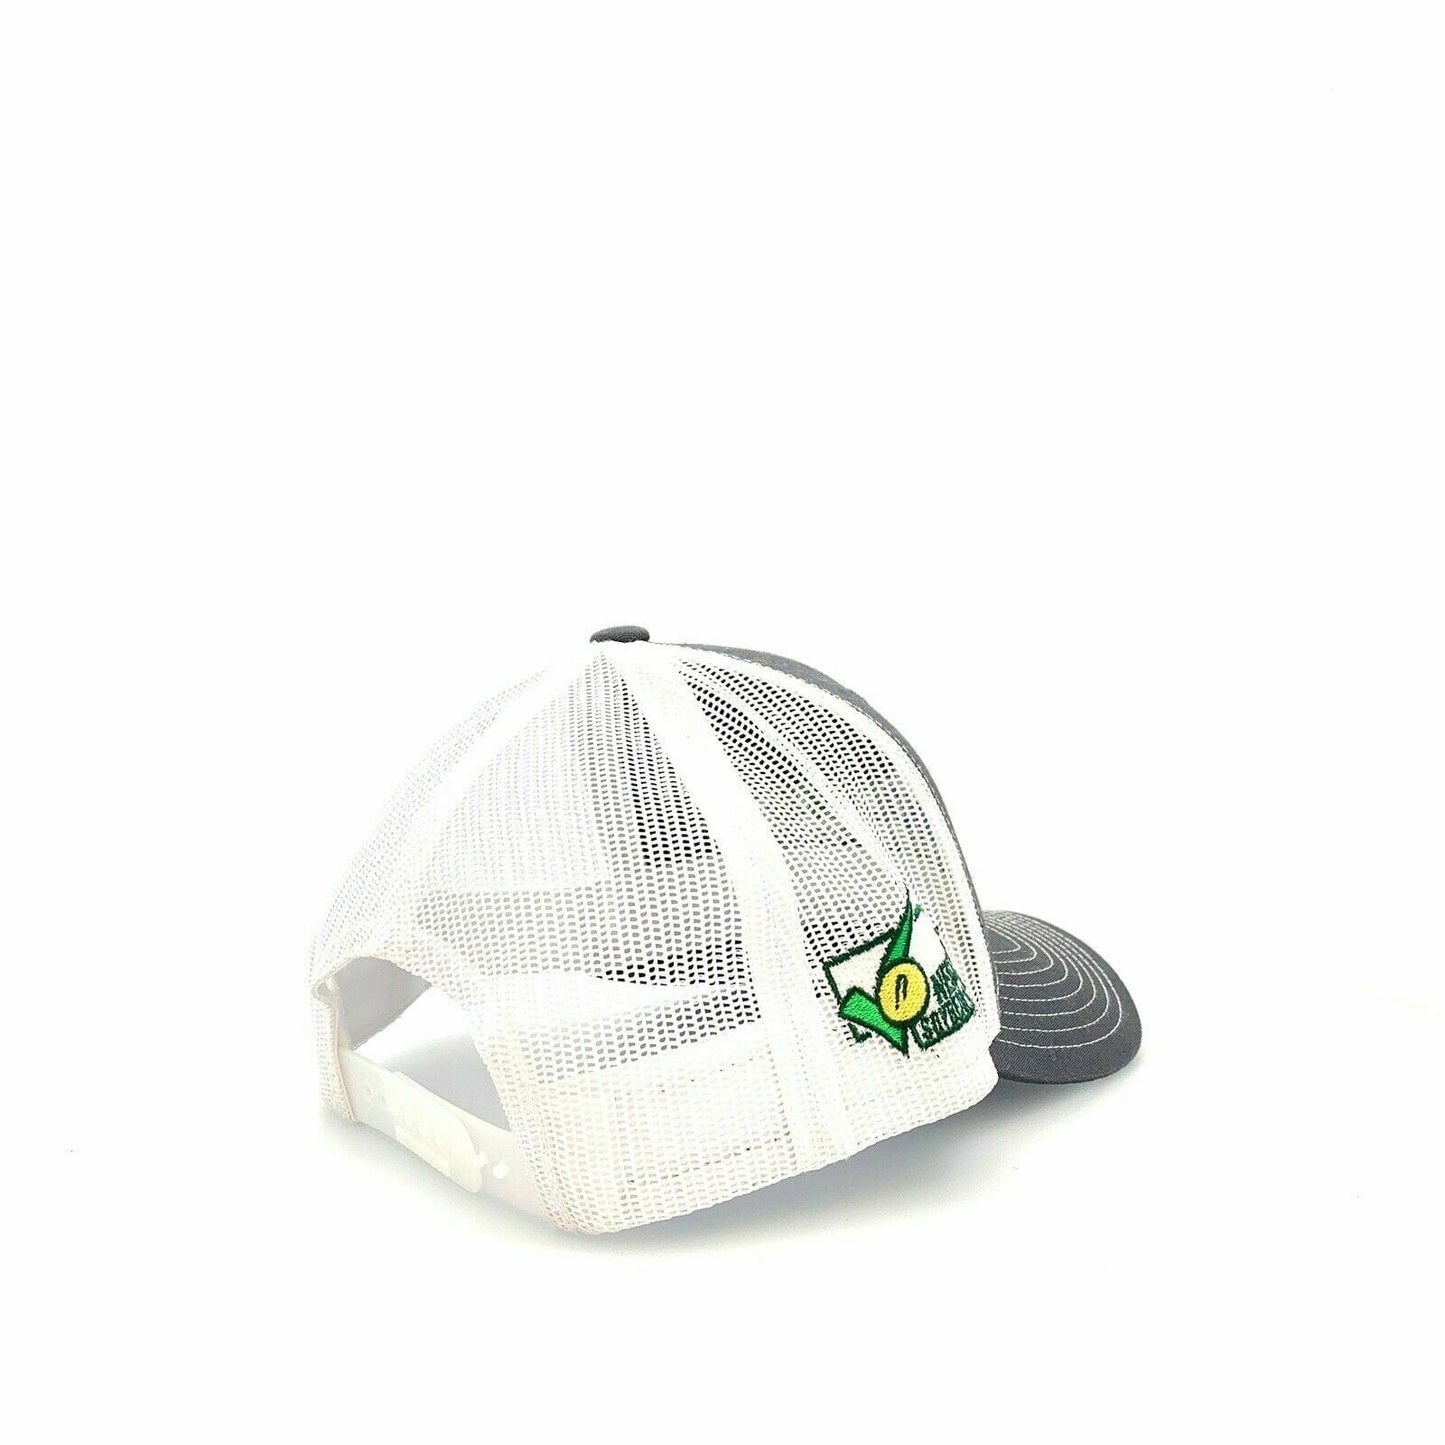 BIODEISEL BIOFUEL Mens Mesh SnapBack Trucker Hat, Gray / White - OSFA